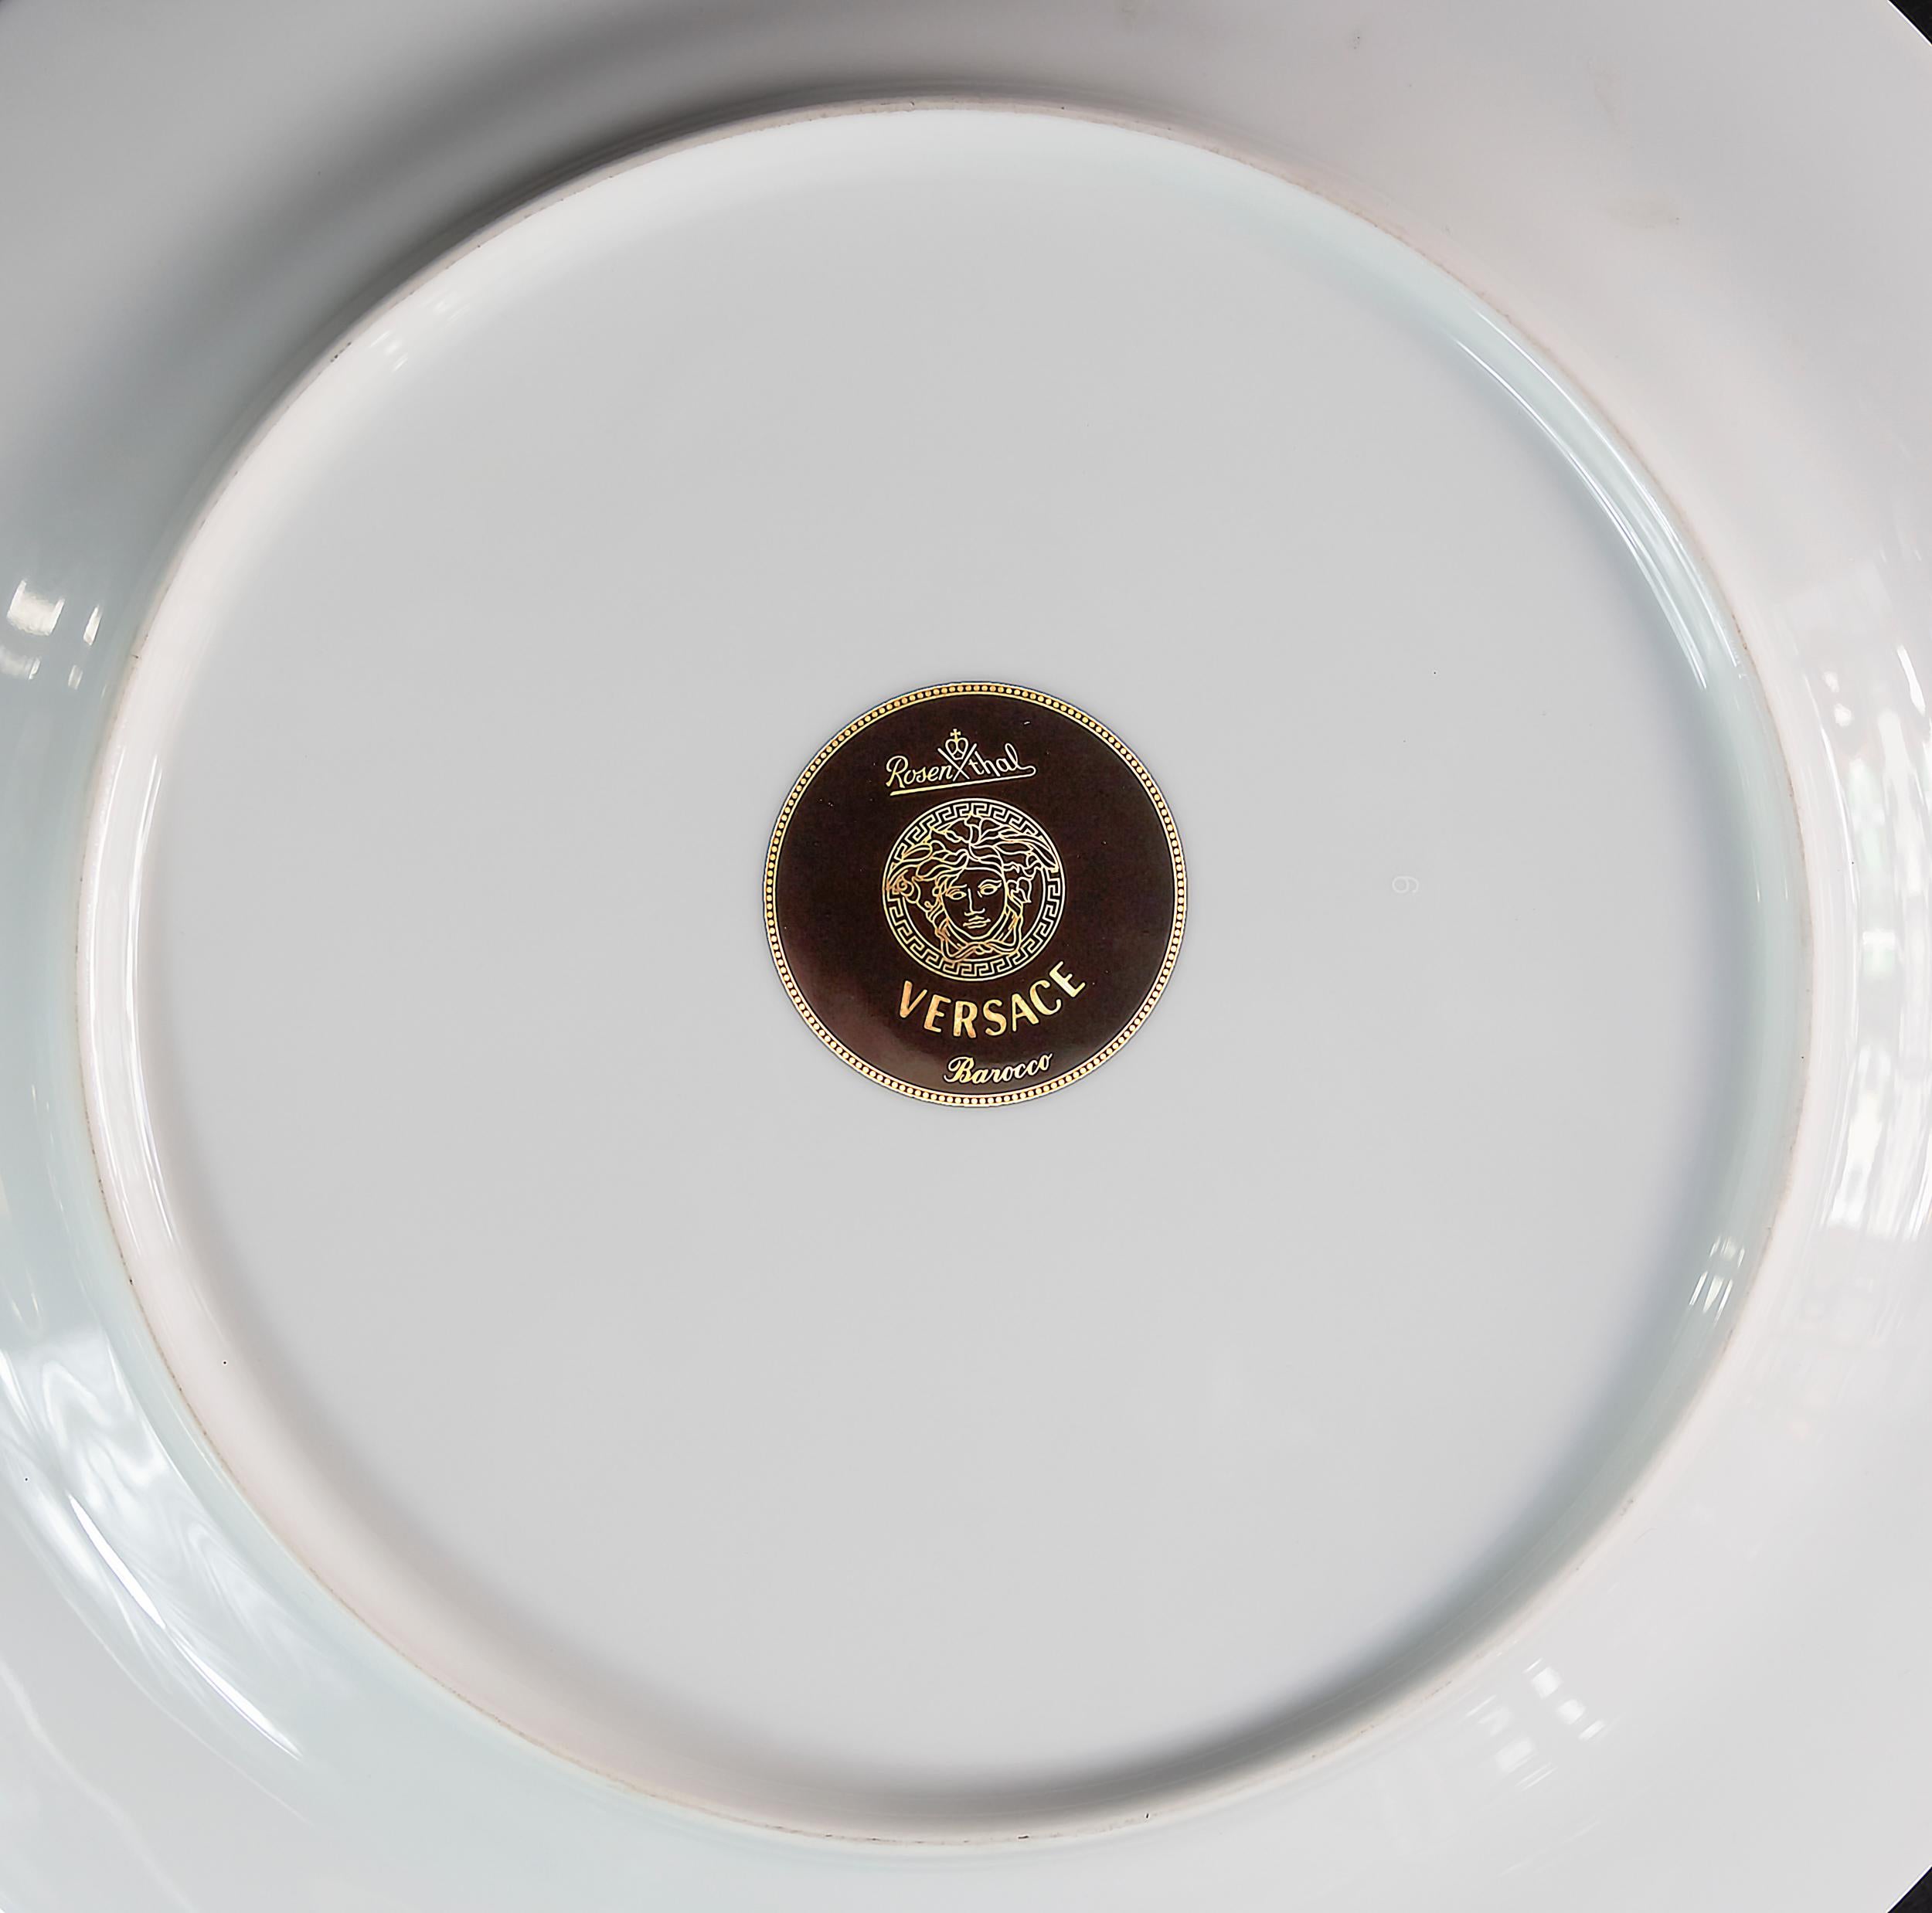 Glazed German Rosenthal Porcelain Serving Plate Model Barocco by Versace